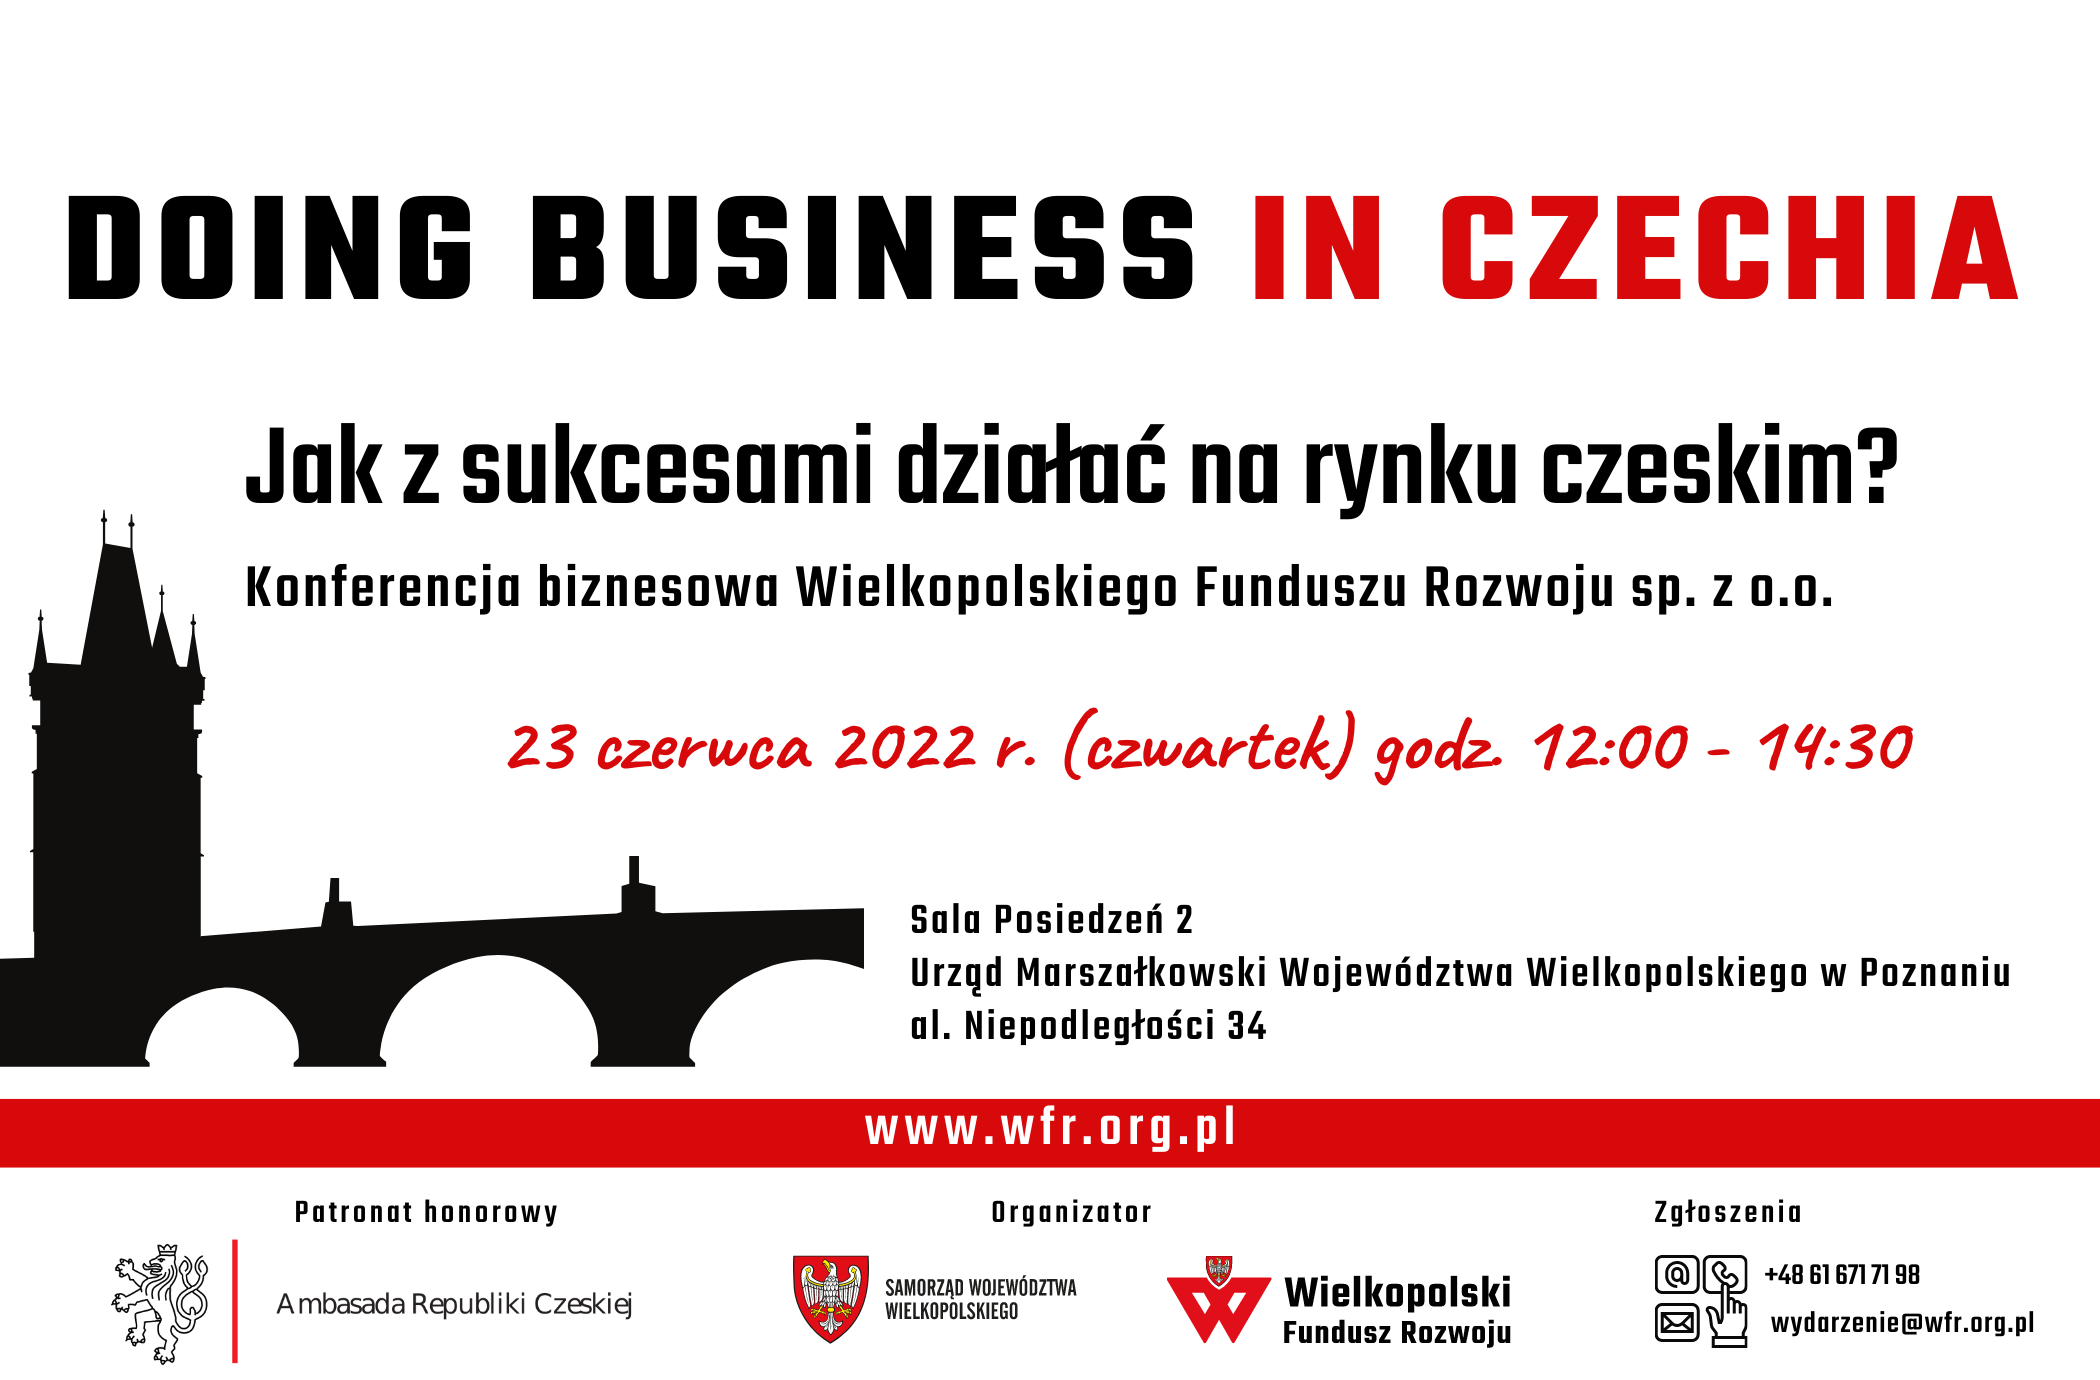 DOING BUSINESS IN CZECHIA